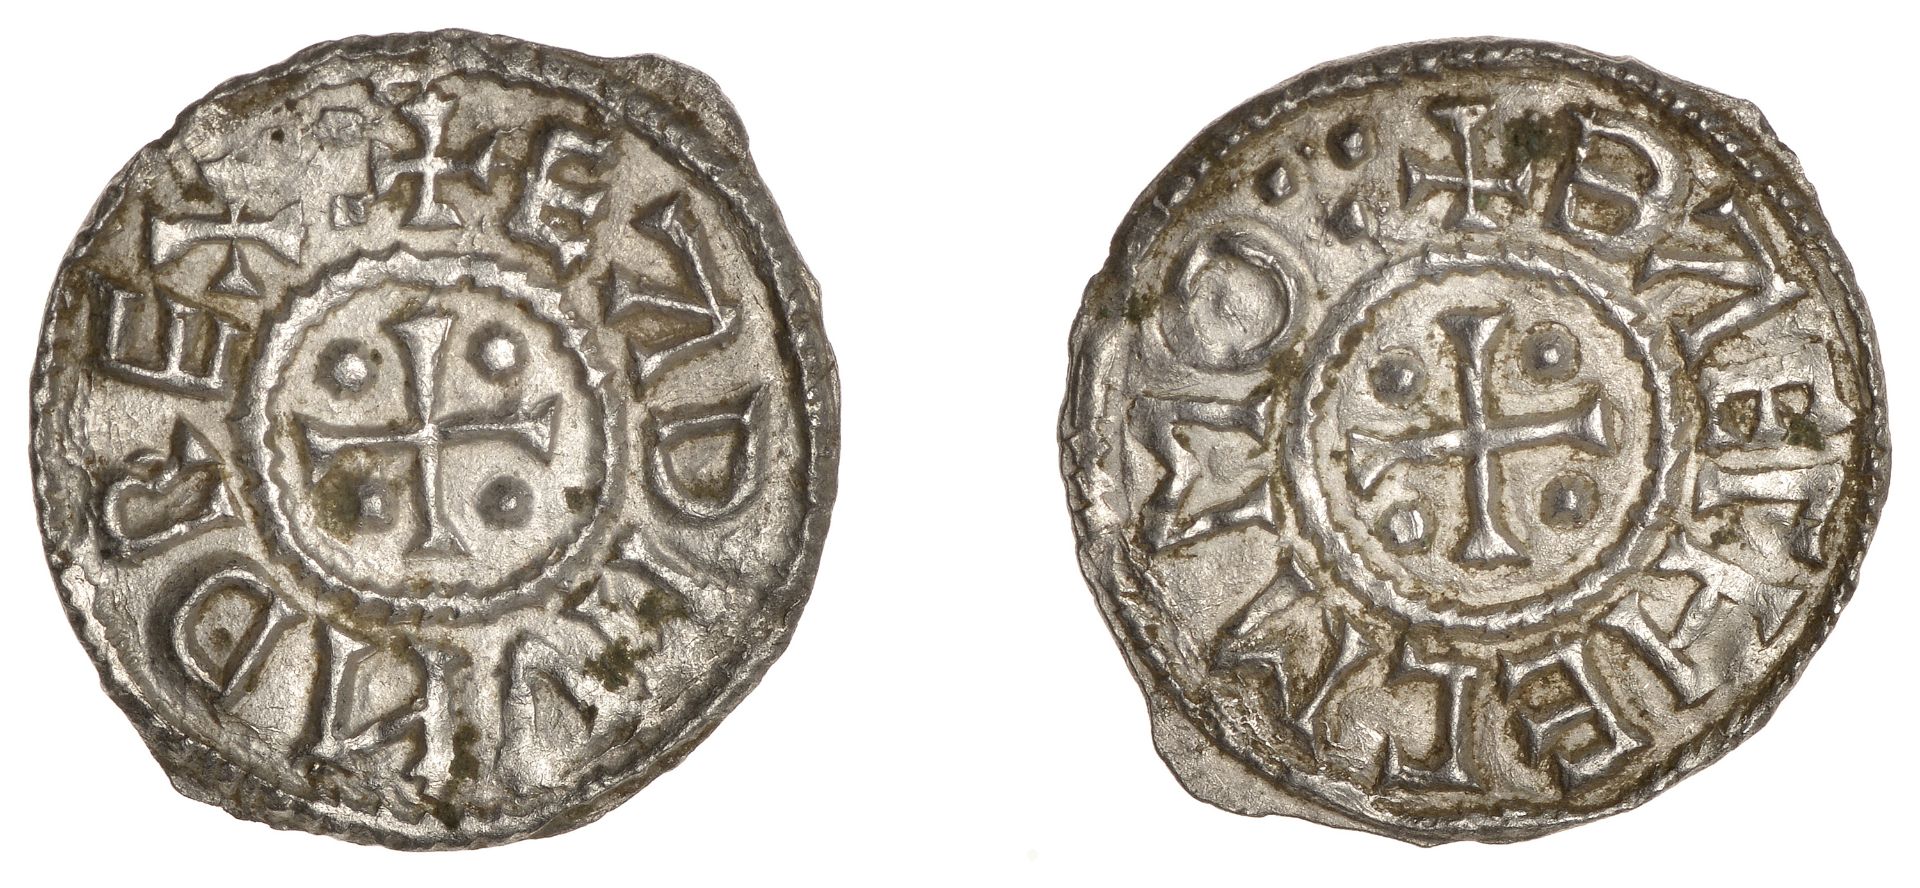 Kings of East Anglia, Eadmund (855-69), Penny, BÃ¦ghelm, eadmvnd rex, cross pattÃ©e with pelle...